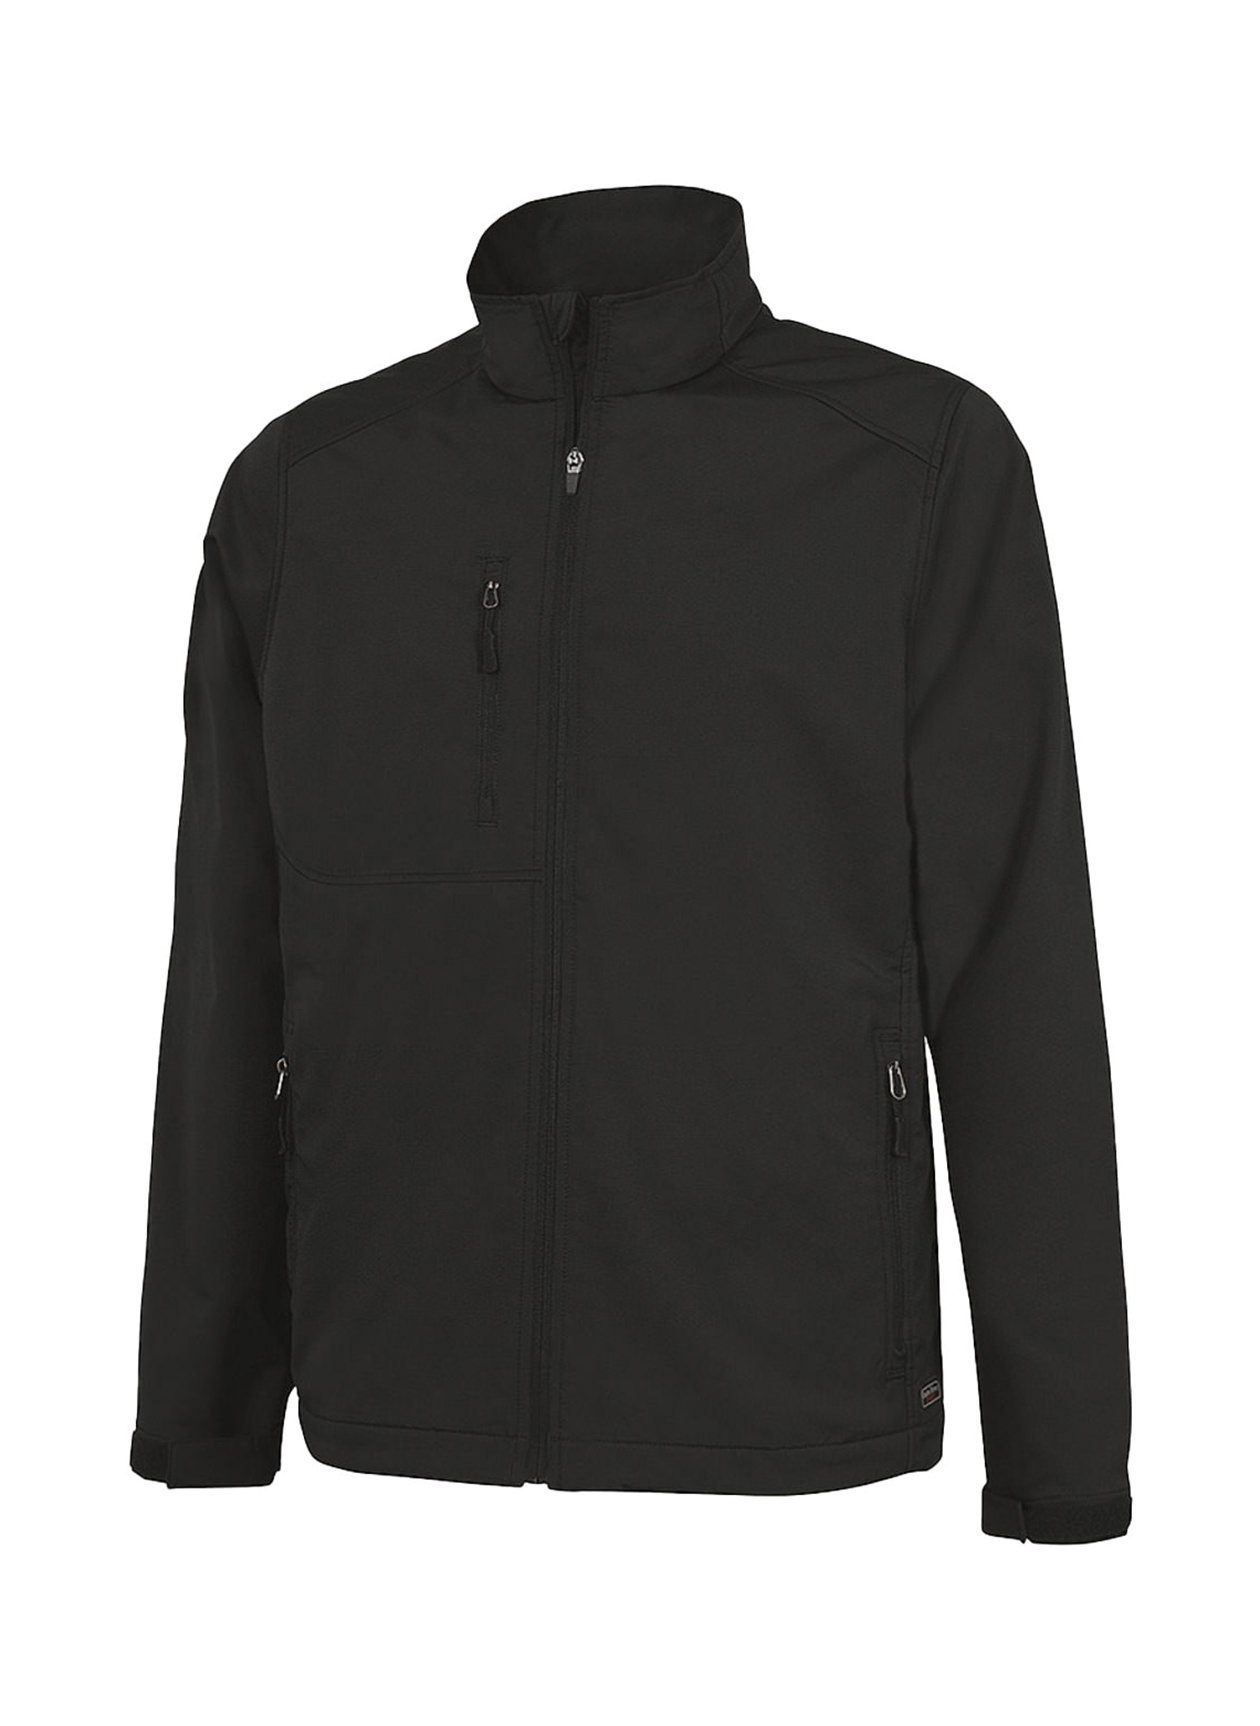 Corporate Charles River Men's Black Axis Soft Shell Jacket | Custom Jackets